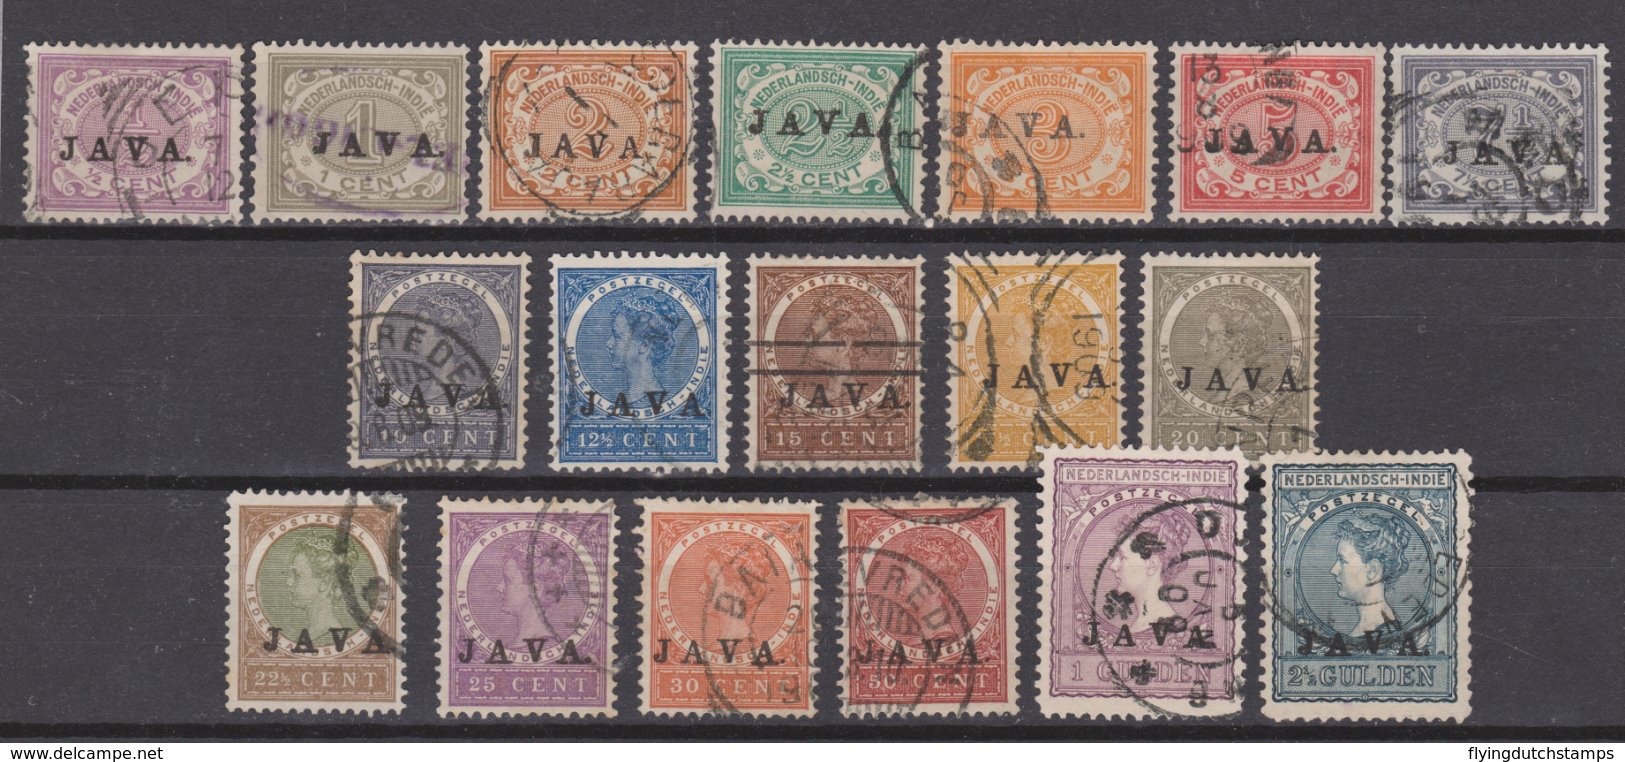 Nr 63-80 Used JAVA 1908 ; NETHERLANDS INDIES PER PIECE NEDERLANDS INDIE PER STUK - Nederlands-Indië